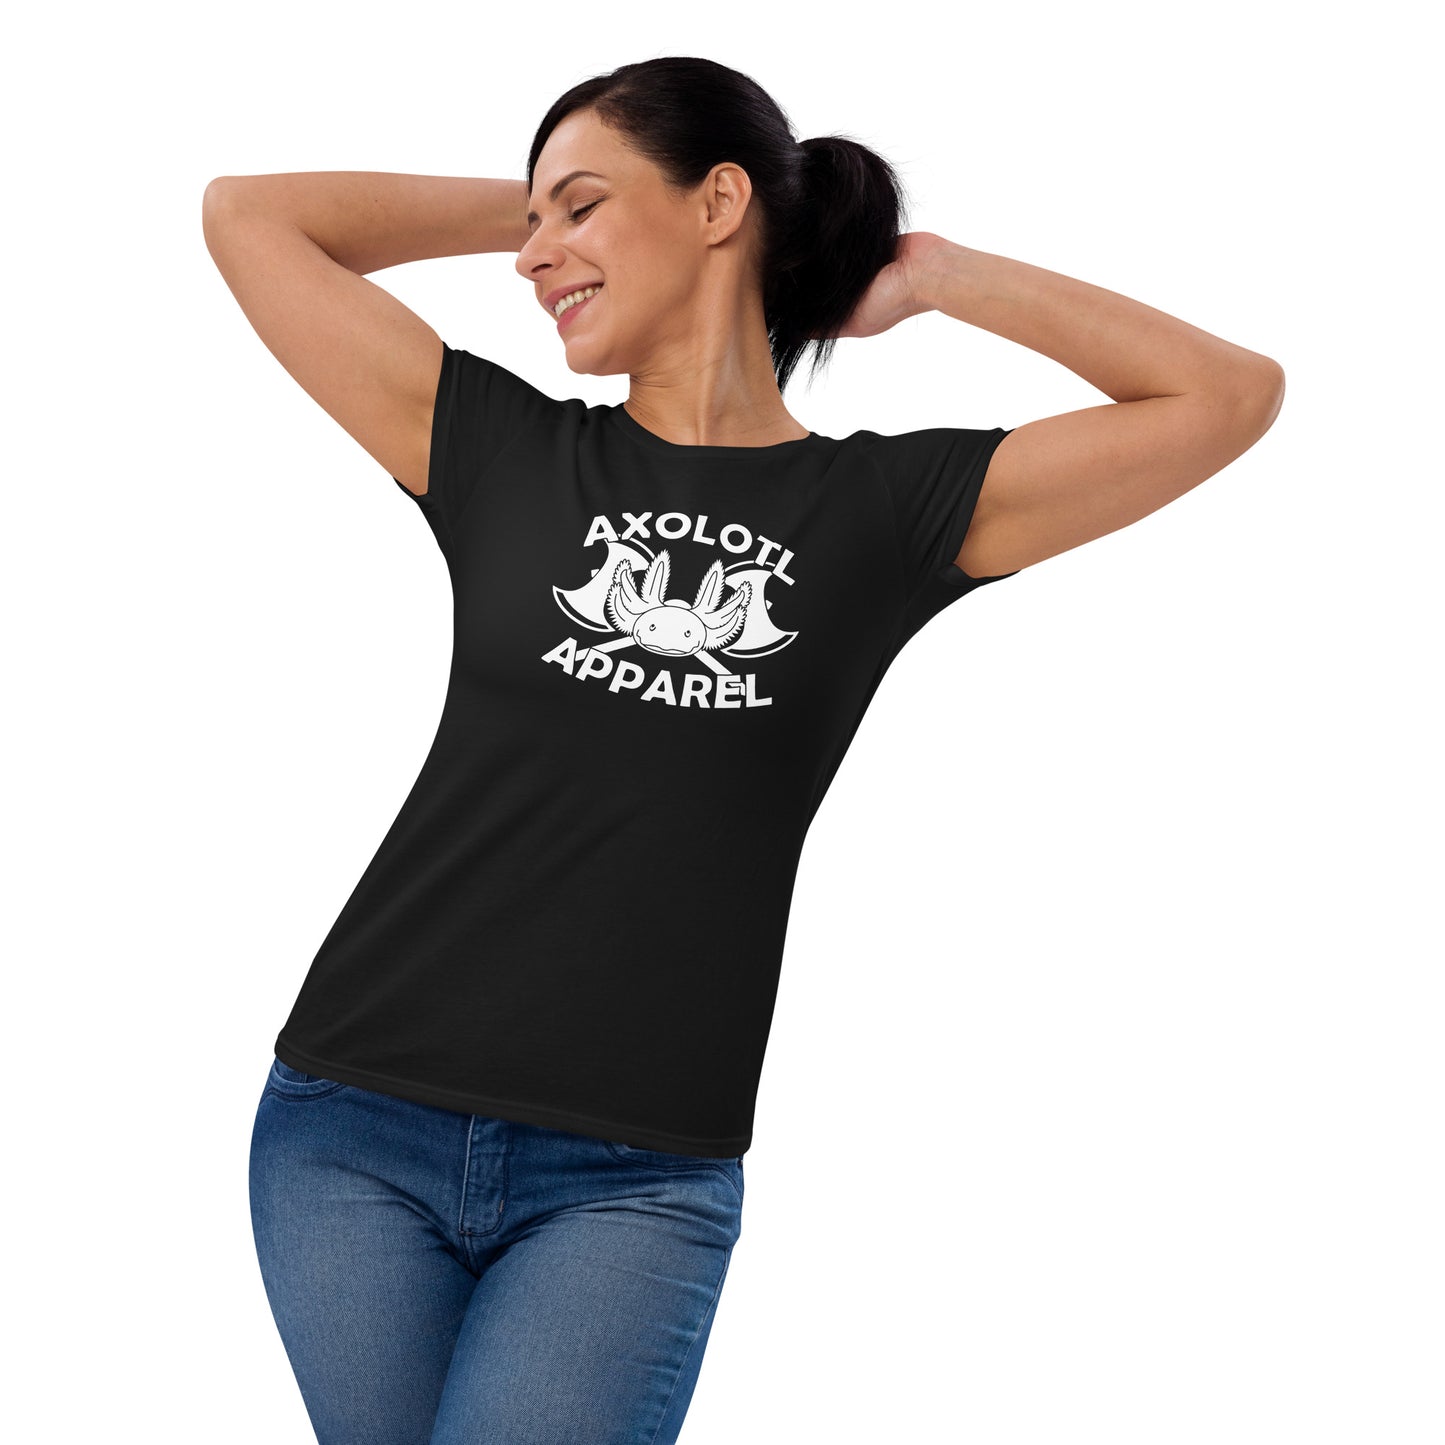 Axolotl-apparel-logo_Womens_Short-sleeve_T-shirt_Black_Mockup